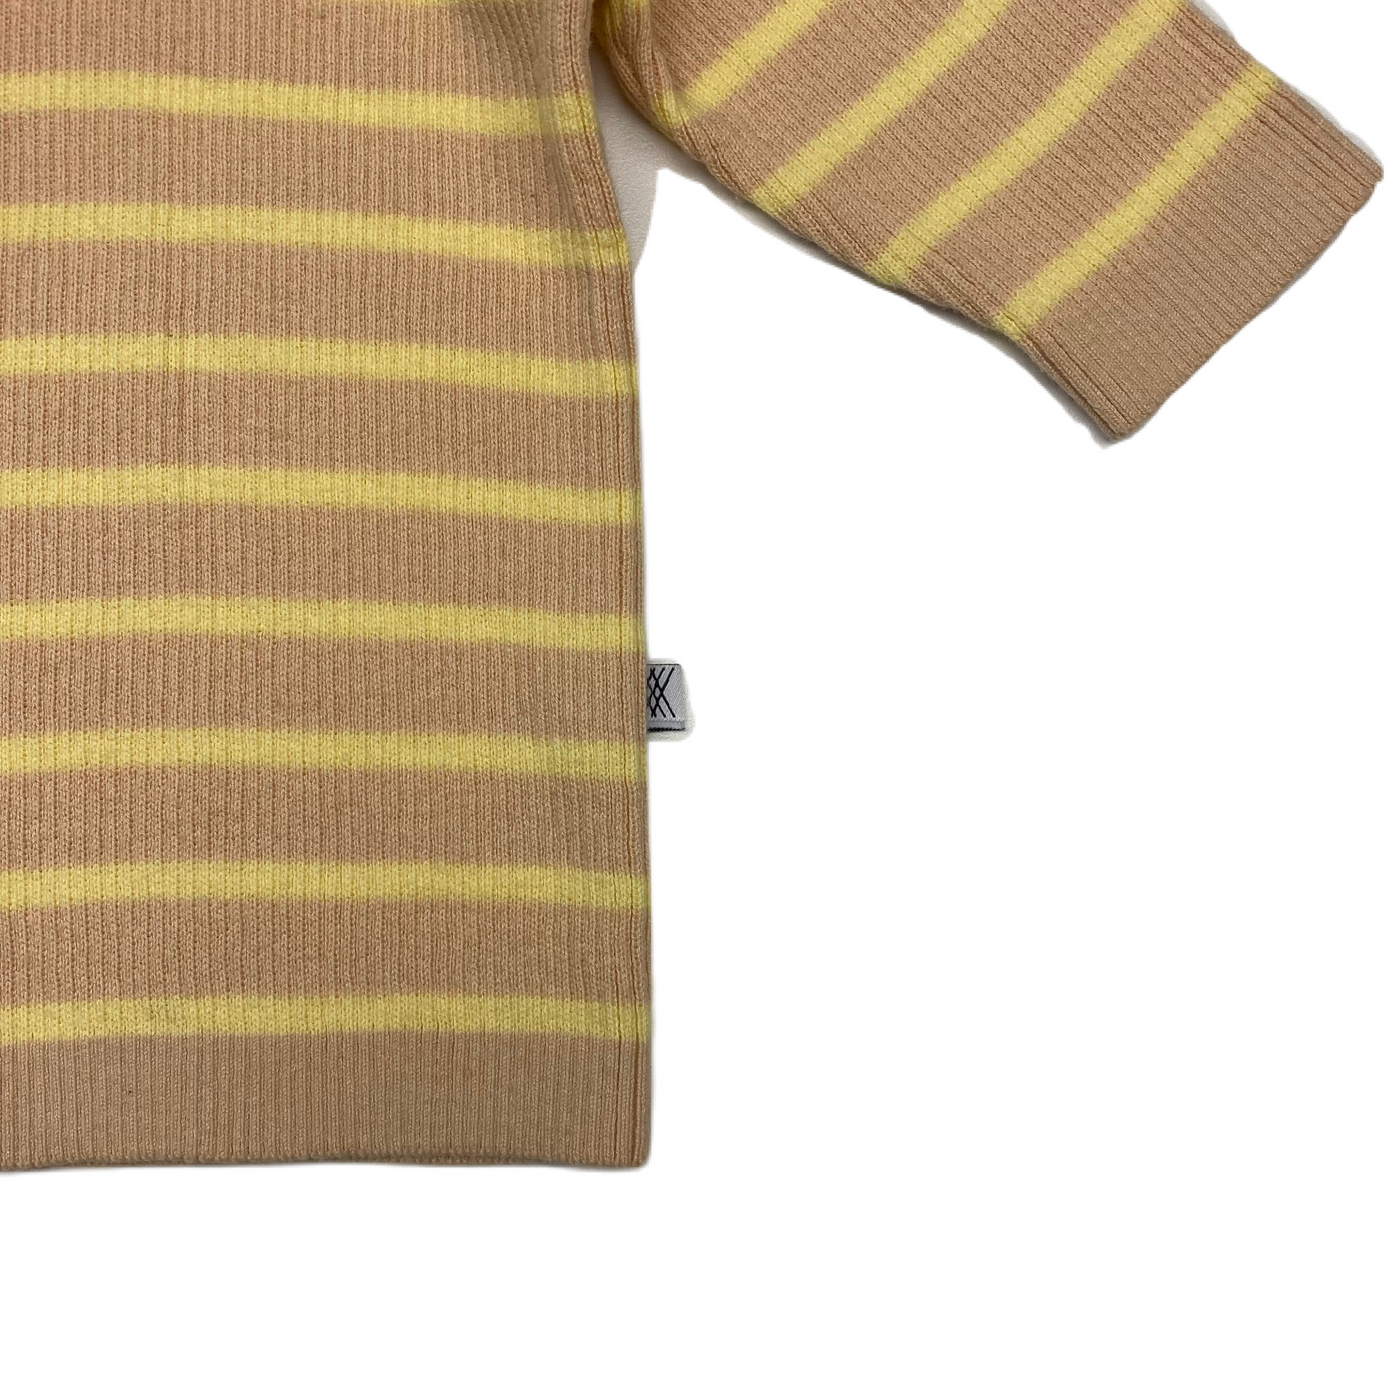 Repose Ams. - Minikin knitted sweater stripes yellow nude 6m